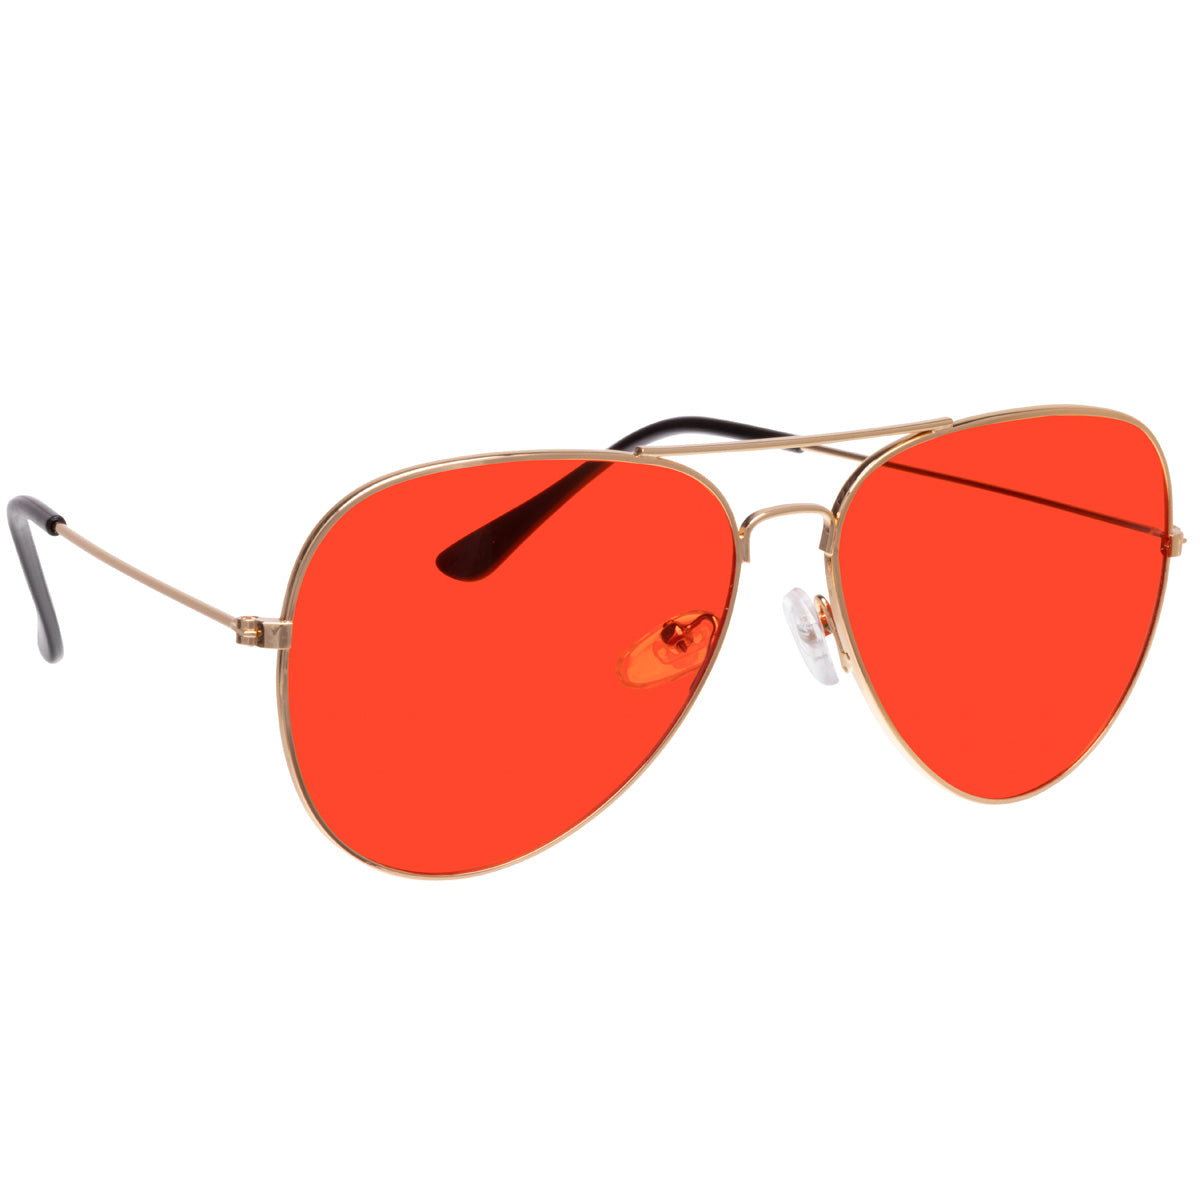 Red pilot glasses sunglasses